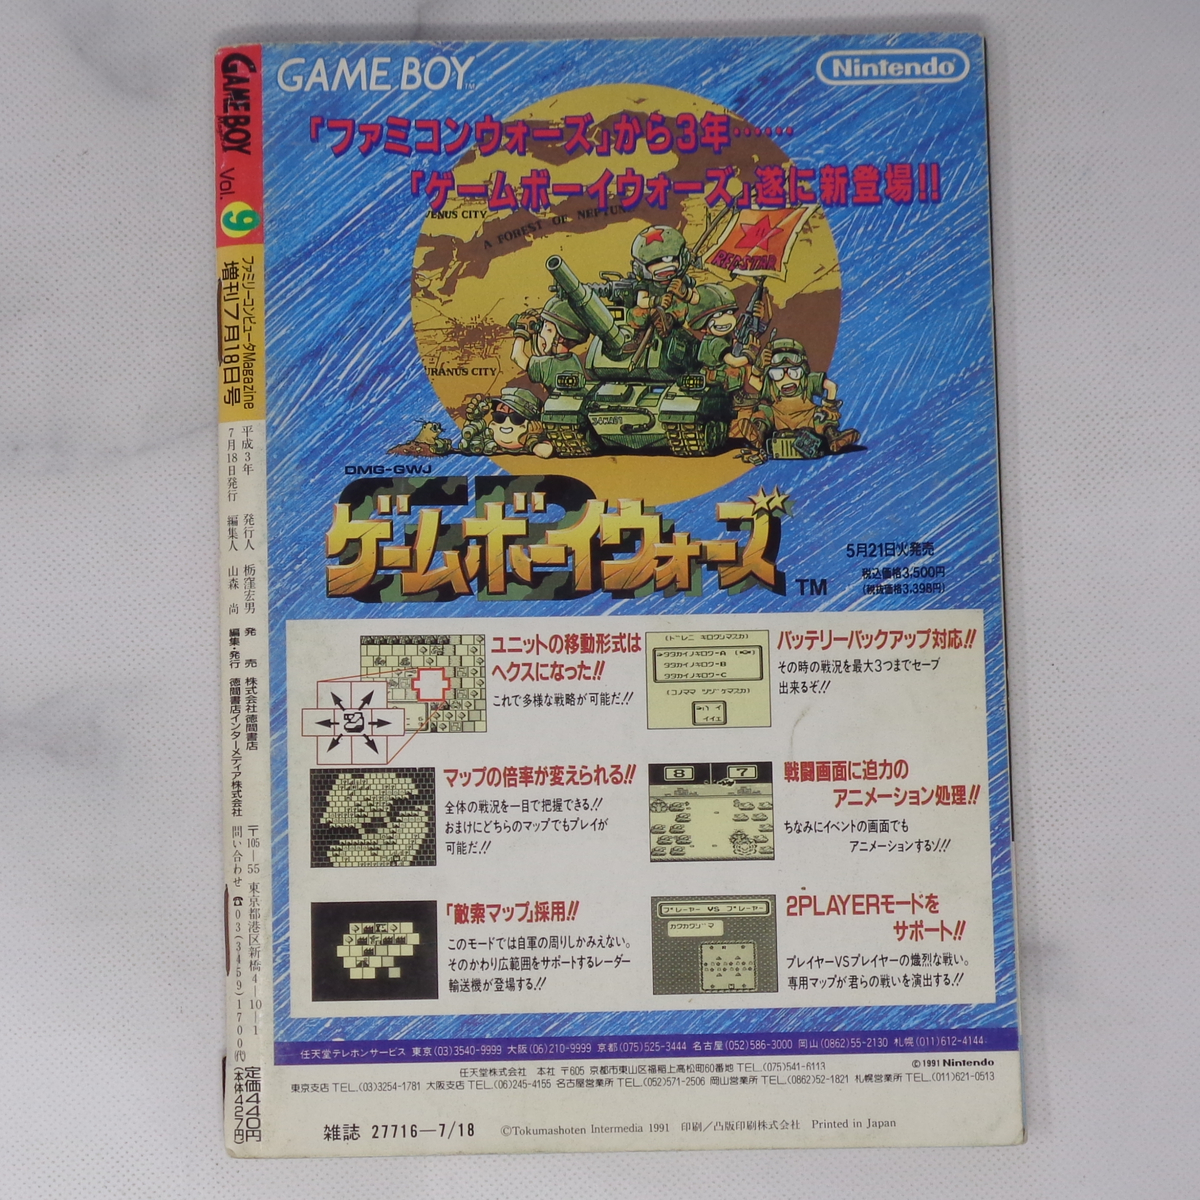 GameBoy Magazine Vol.9 1991年7月18日号 別冊付録無し /聖剣伝説/ゲームボーイマガジン/ファミマガ/ゲーム雑誌[Free Shipping]